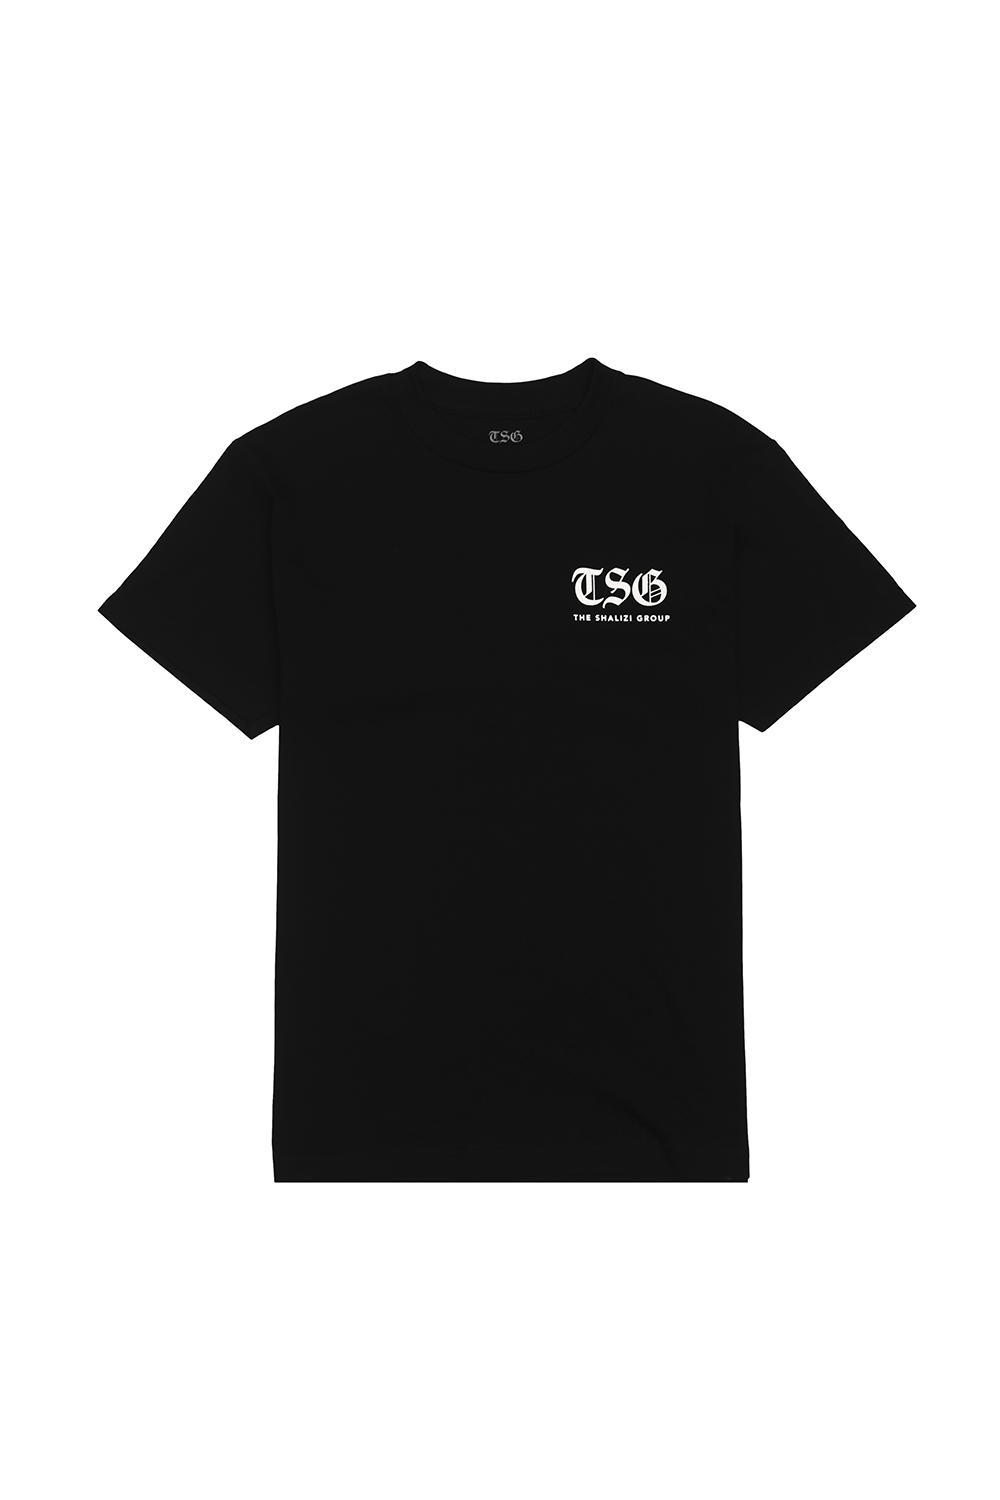 Black - The Shalizi Group T-Shirt